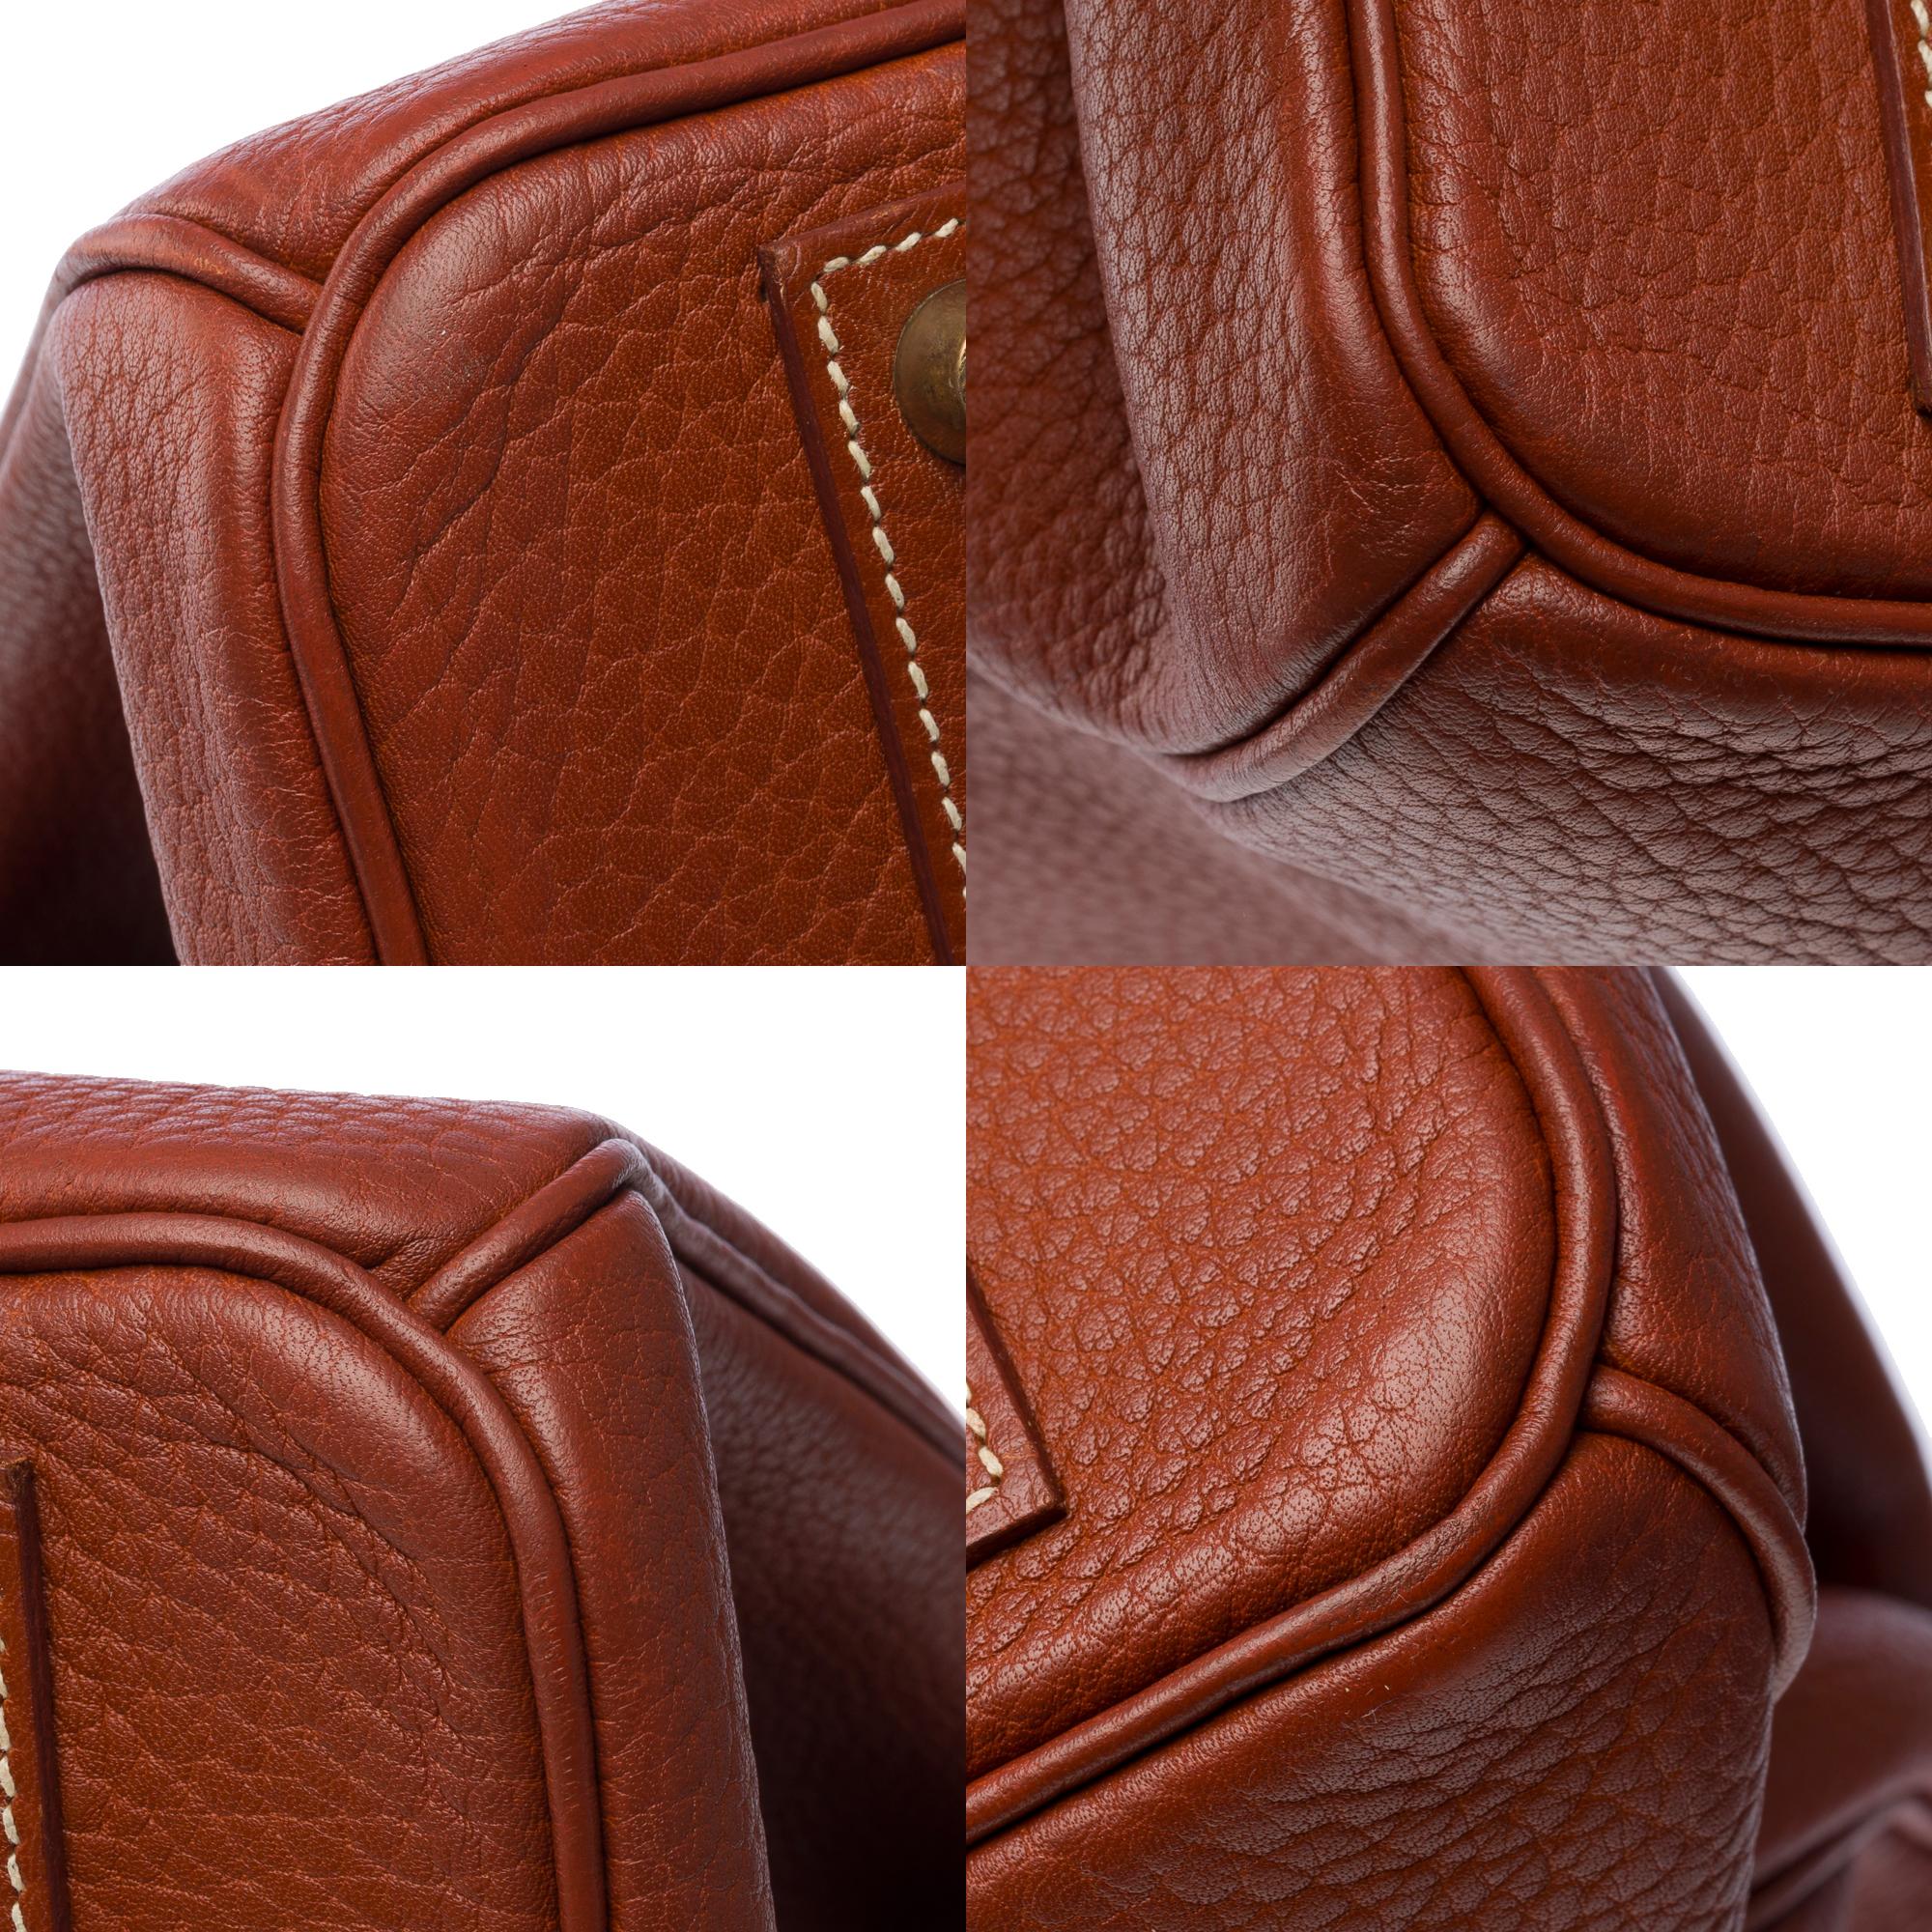 Classy & Rare Hermes Birkin 40 handbag in Brick Fjord leather, GHW 8